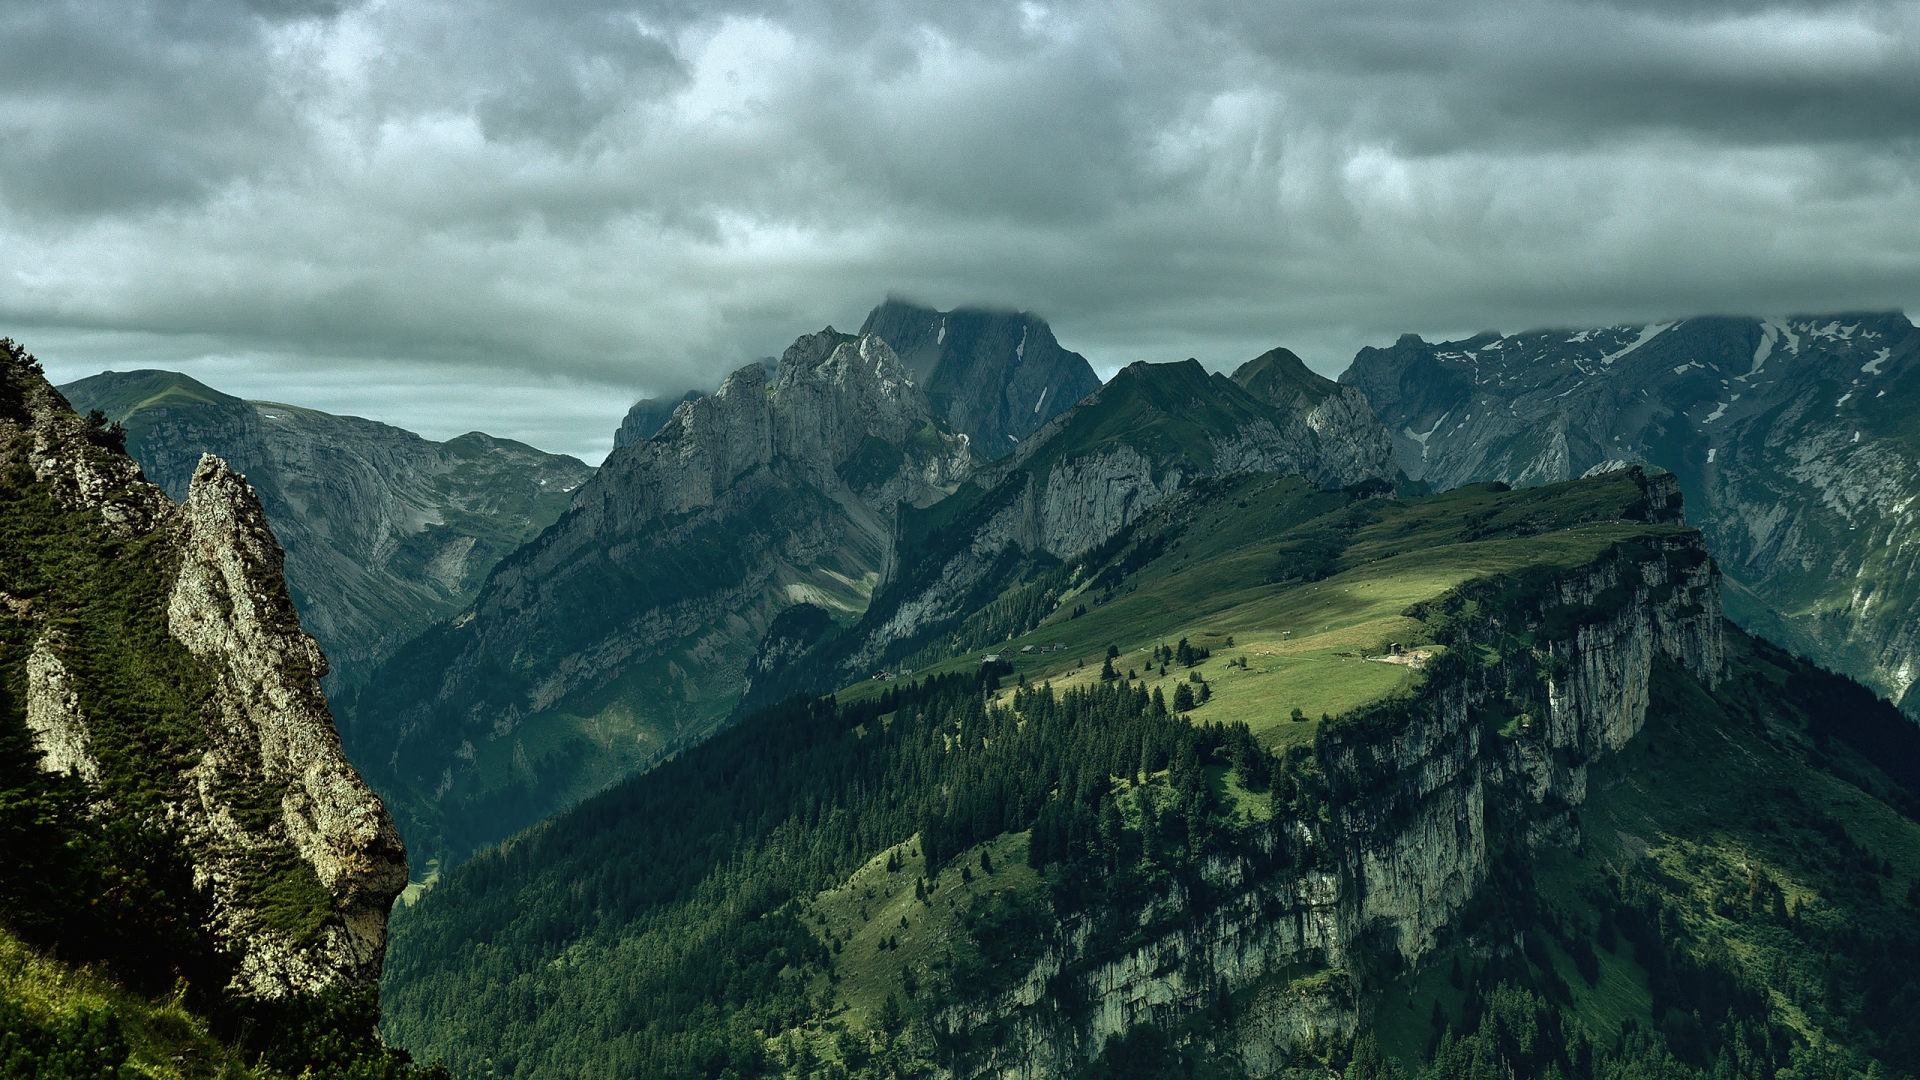 Superb Mountain Landscape for 1920 x 1080 HDTV 1080p resolution